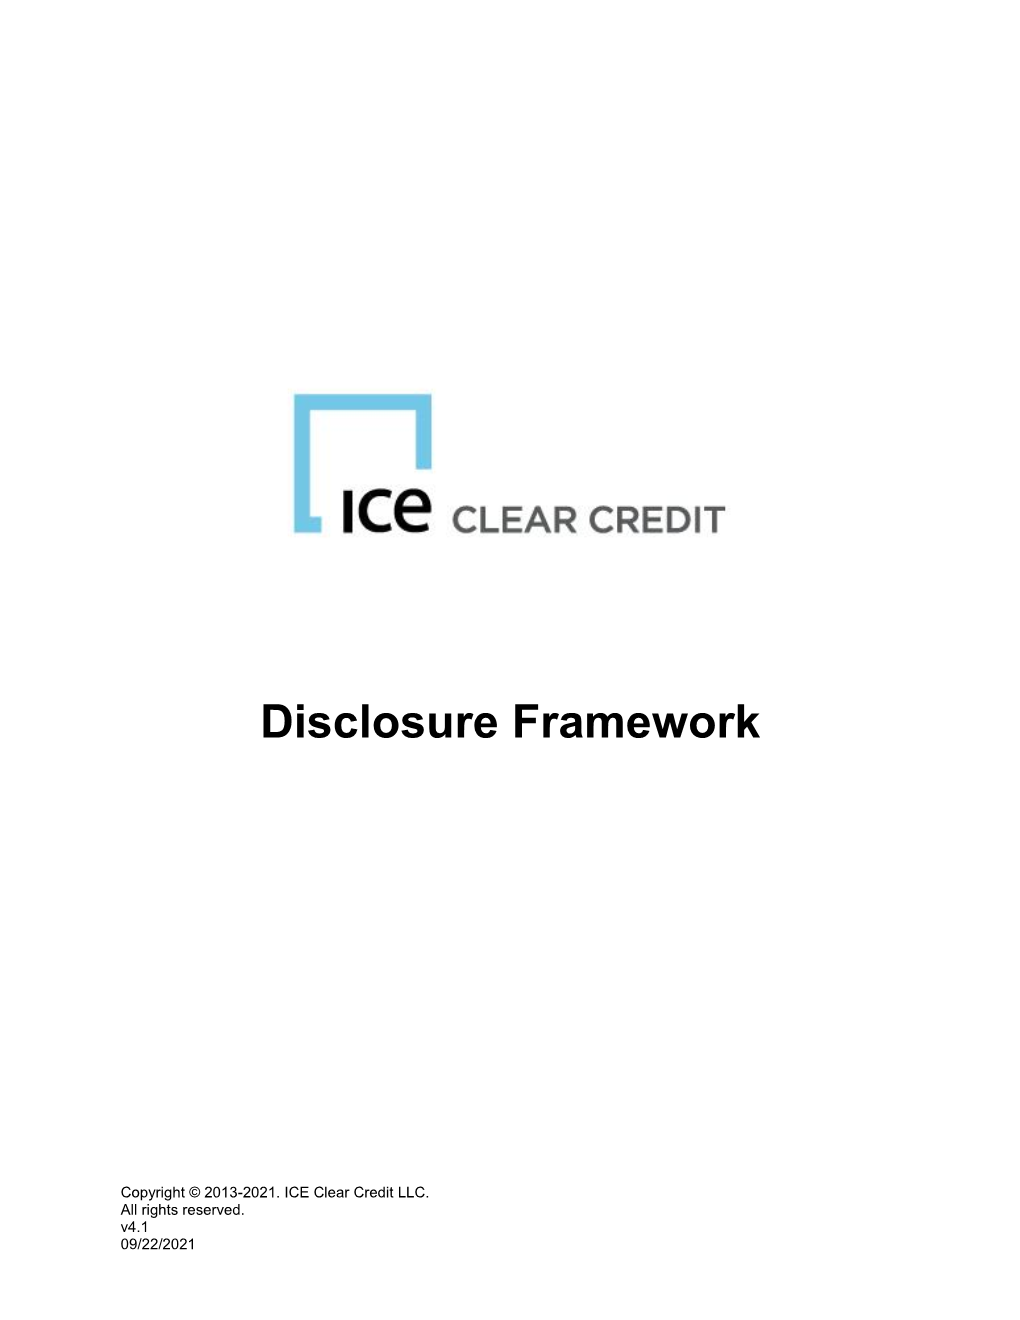 ICE Clear Credit Disclosure Framework